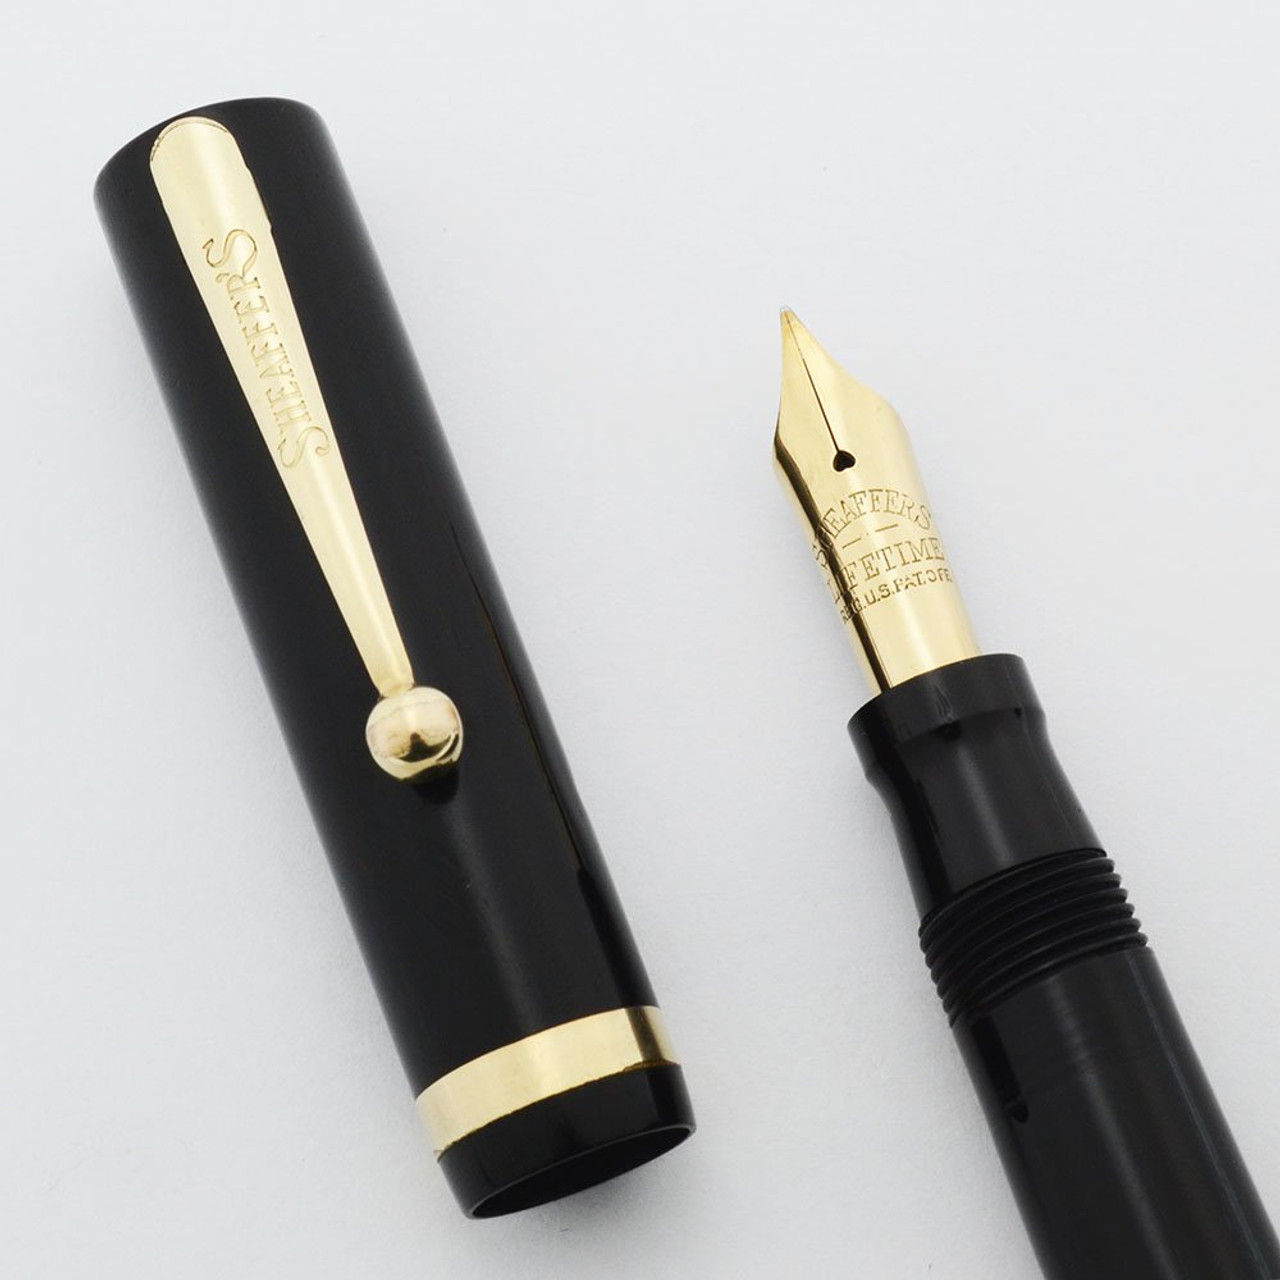 Sheaffer Lifetime Flat Top Fountain Pen - Black, Junior Size, Medium Lifetime Nib (Very Nice, Restored)